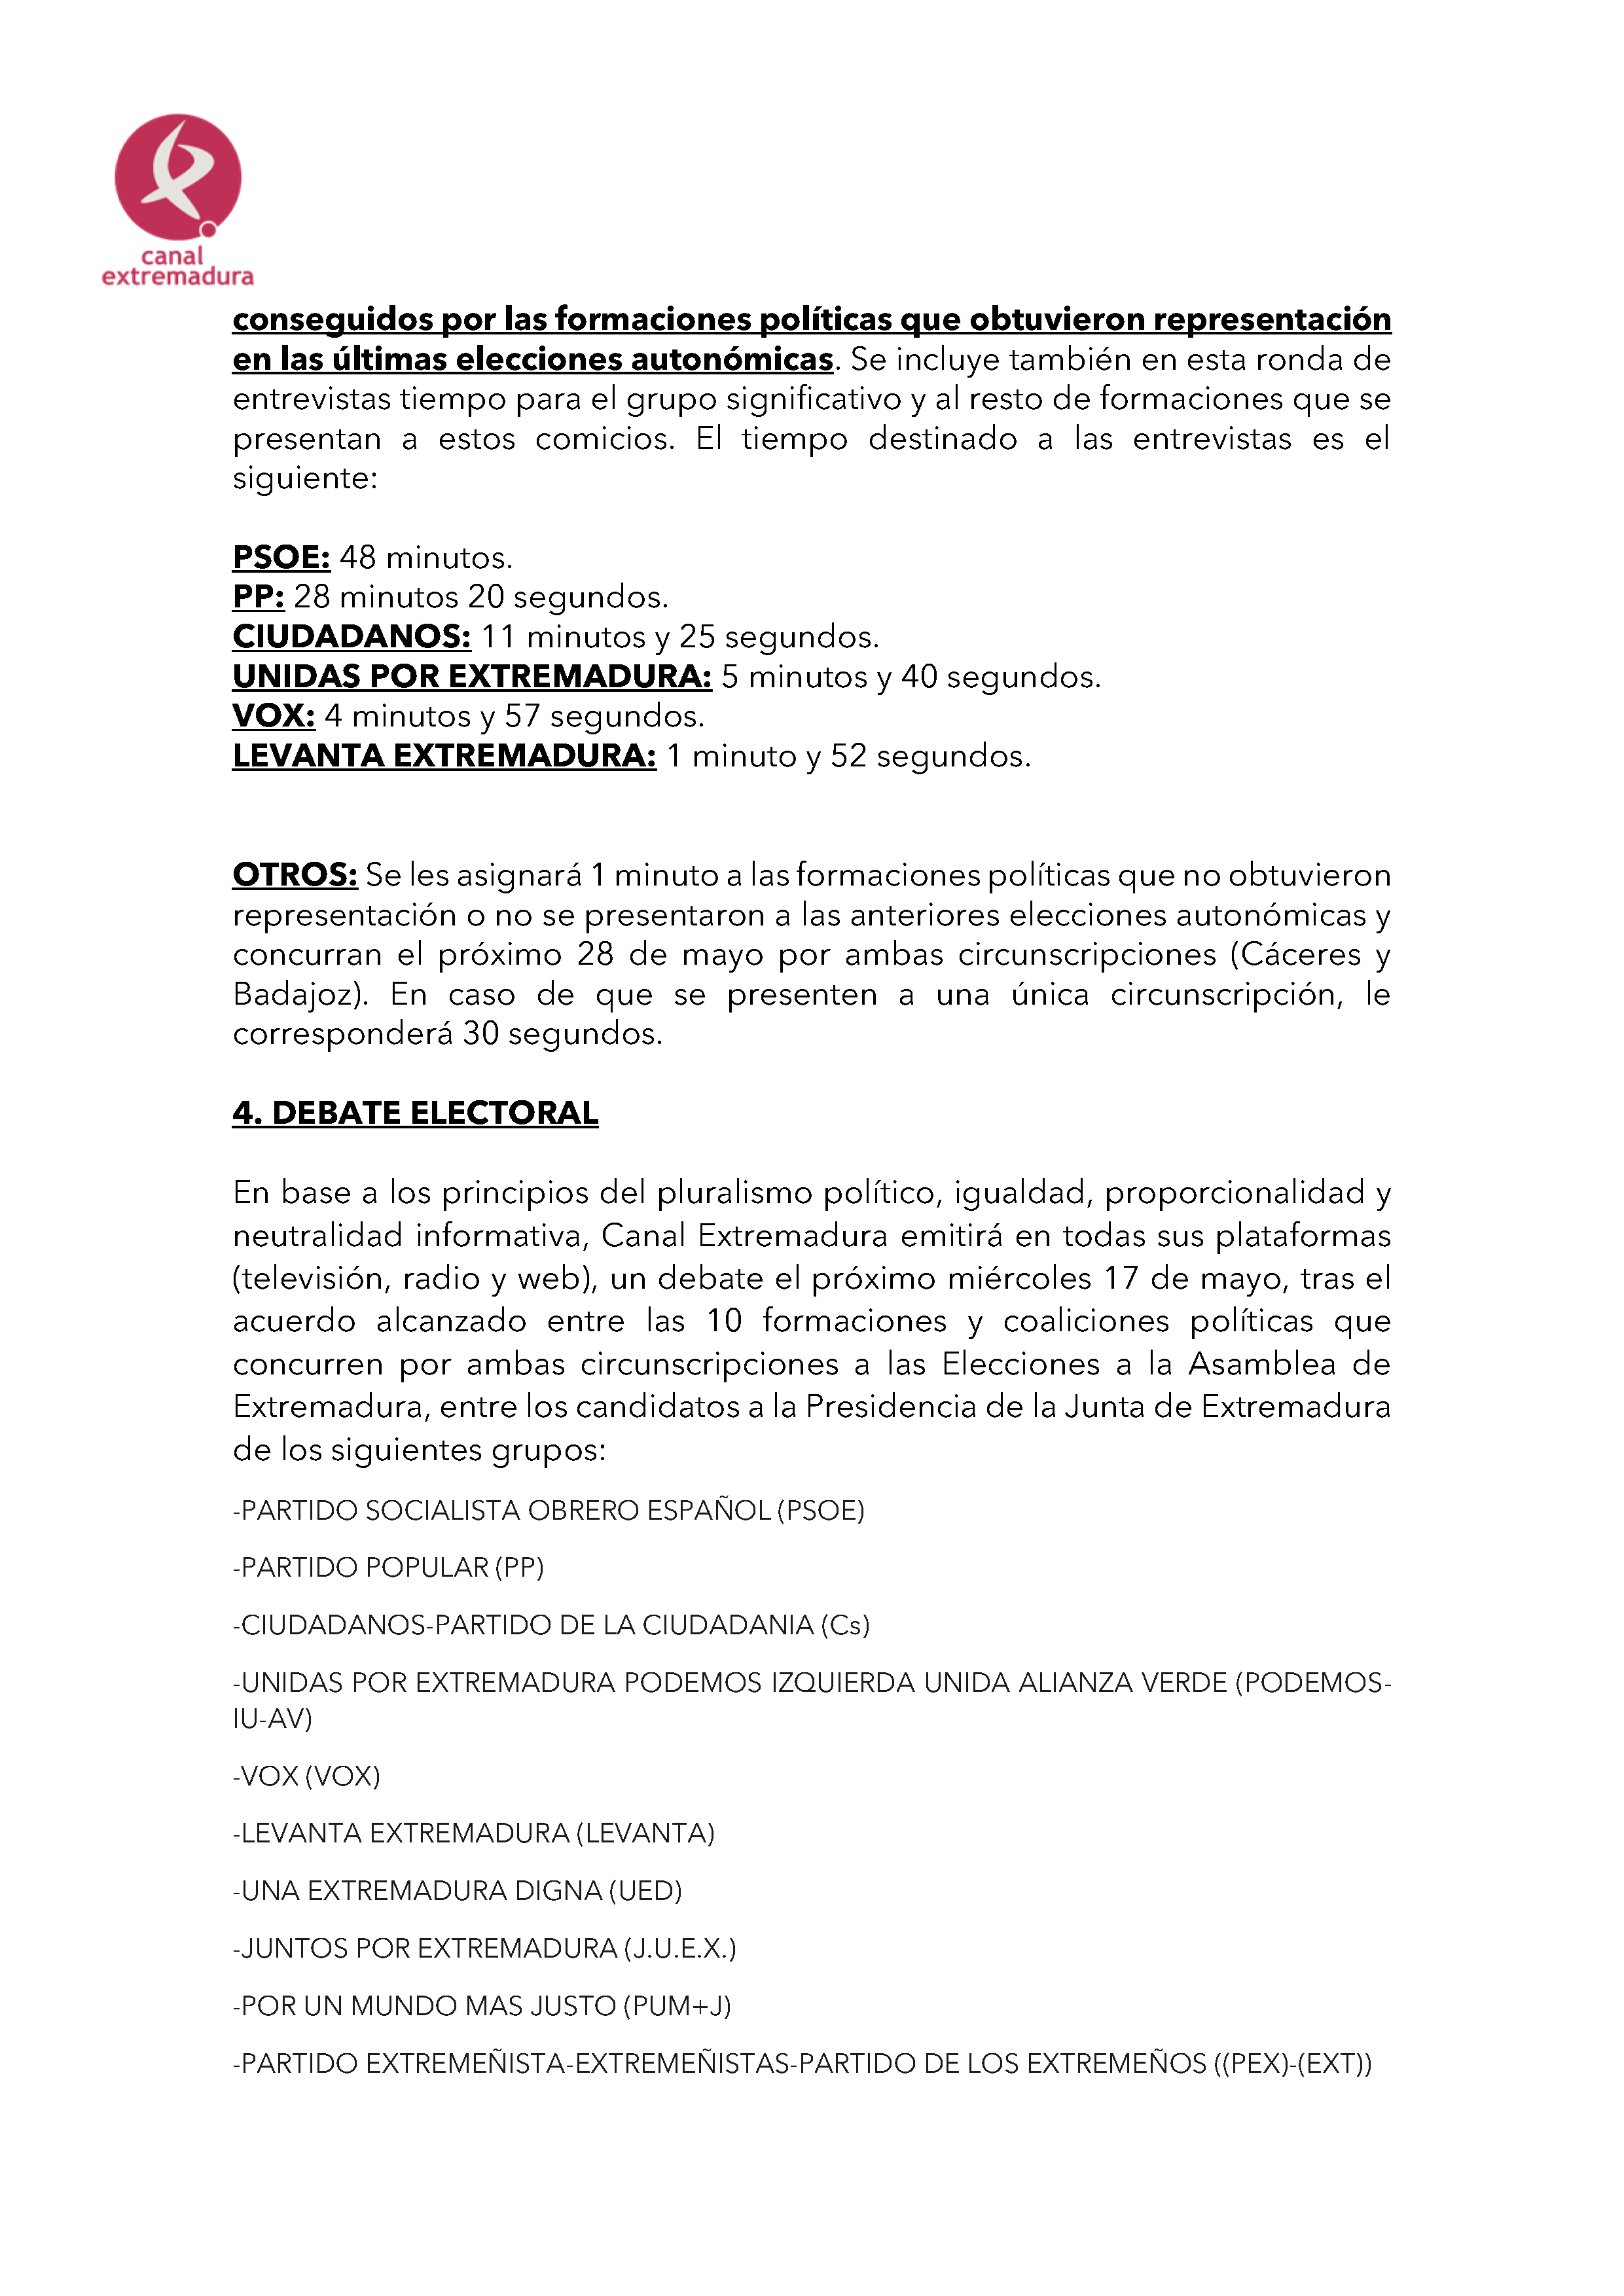 PLAN DE COBERTURA INFORMATIVA DE CANAL EXTREMADURA Pag 7